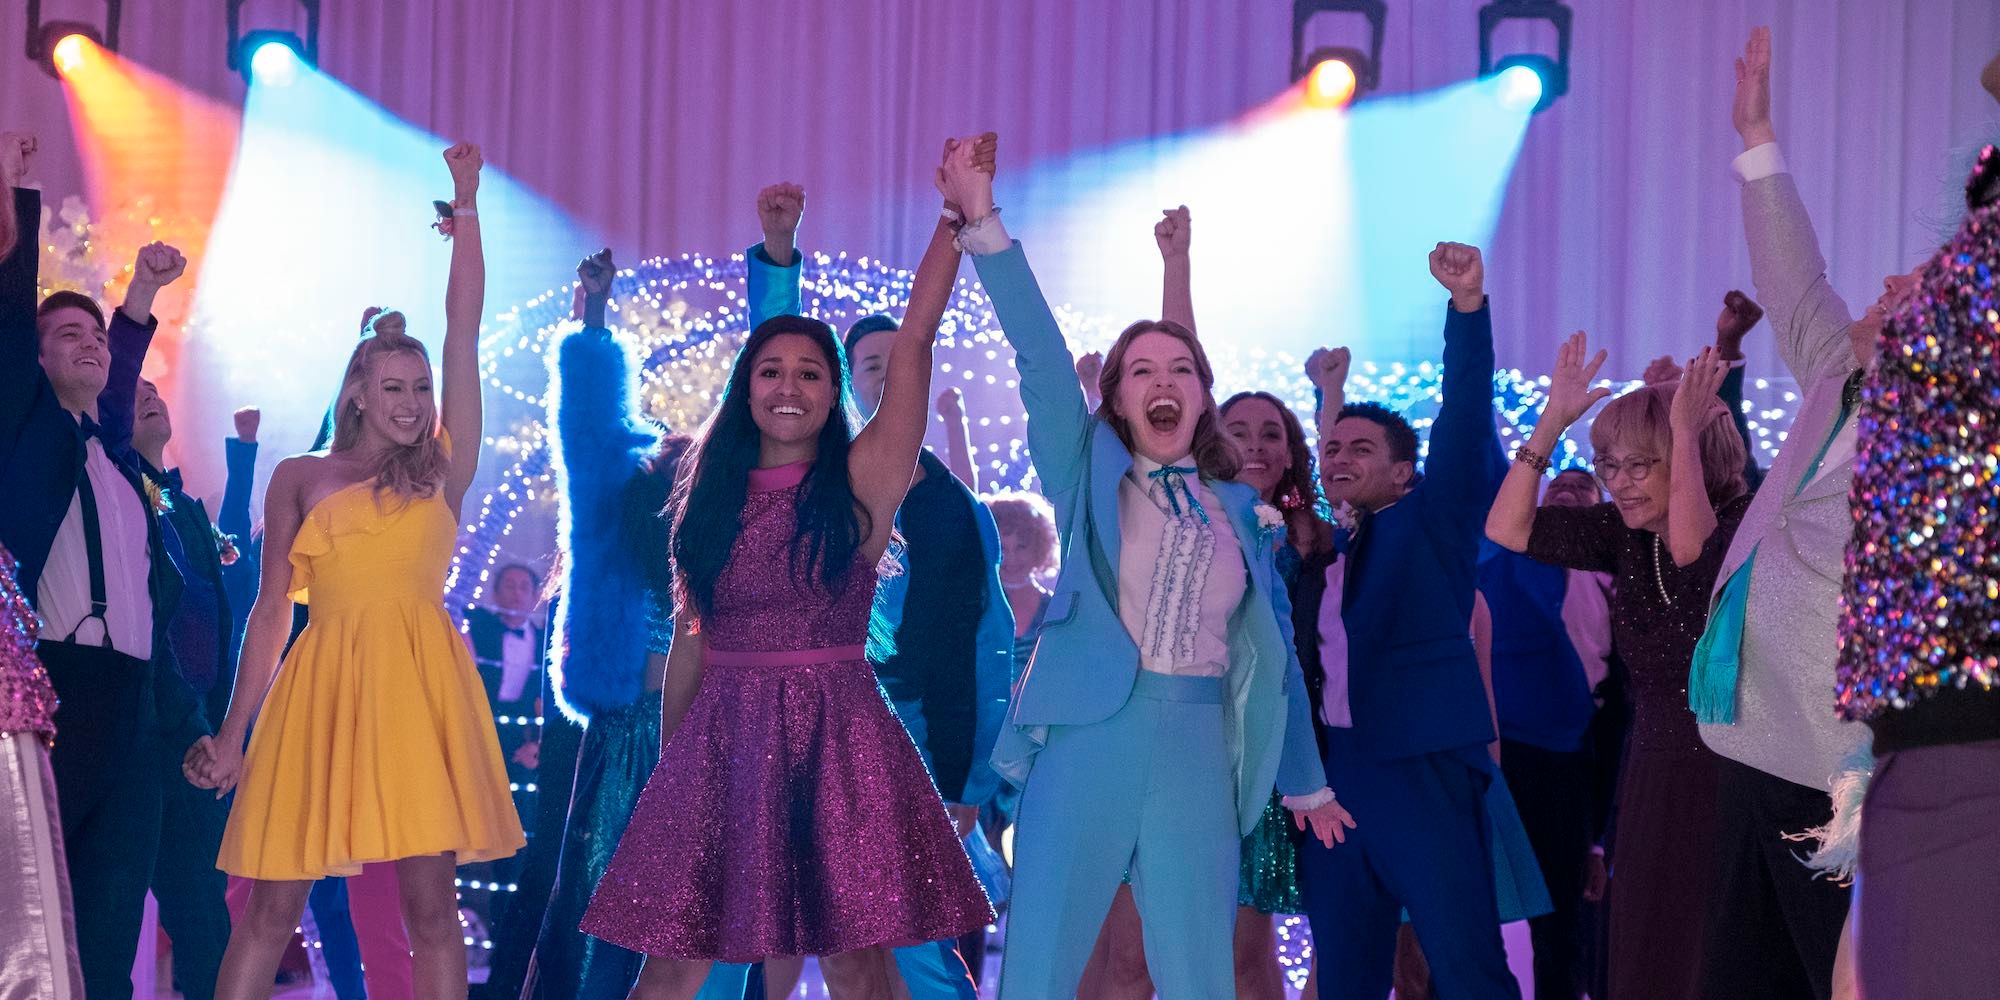 Tráiler de la película The Prom: Ryan Murphy lleva el musical de Broadway a Netflix